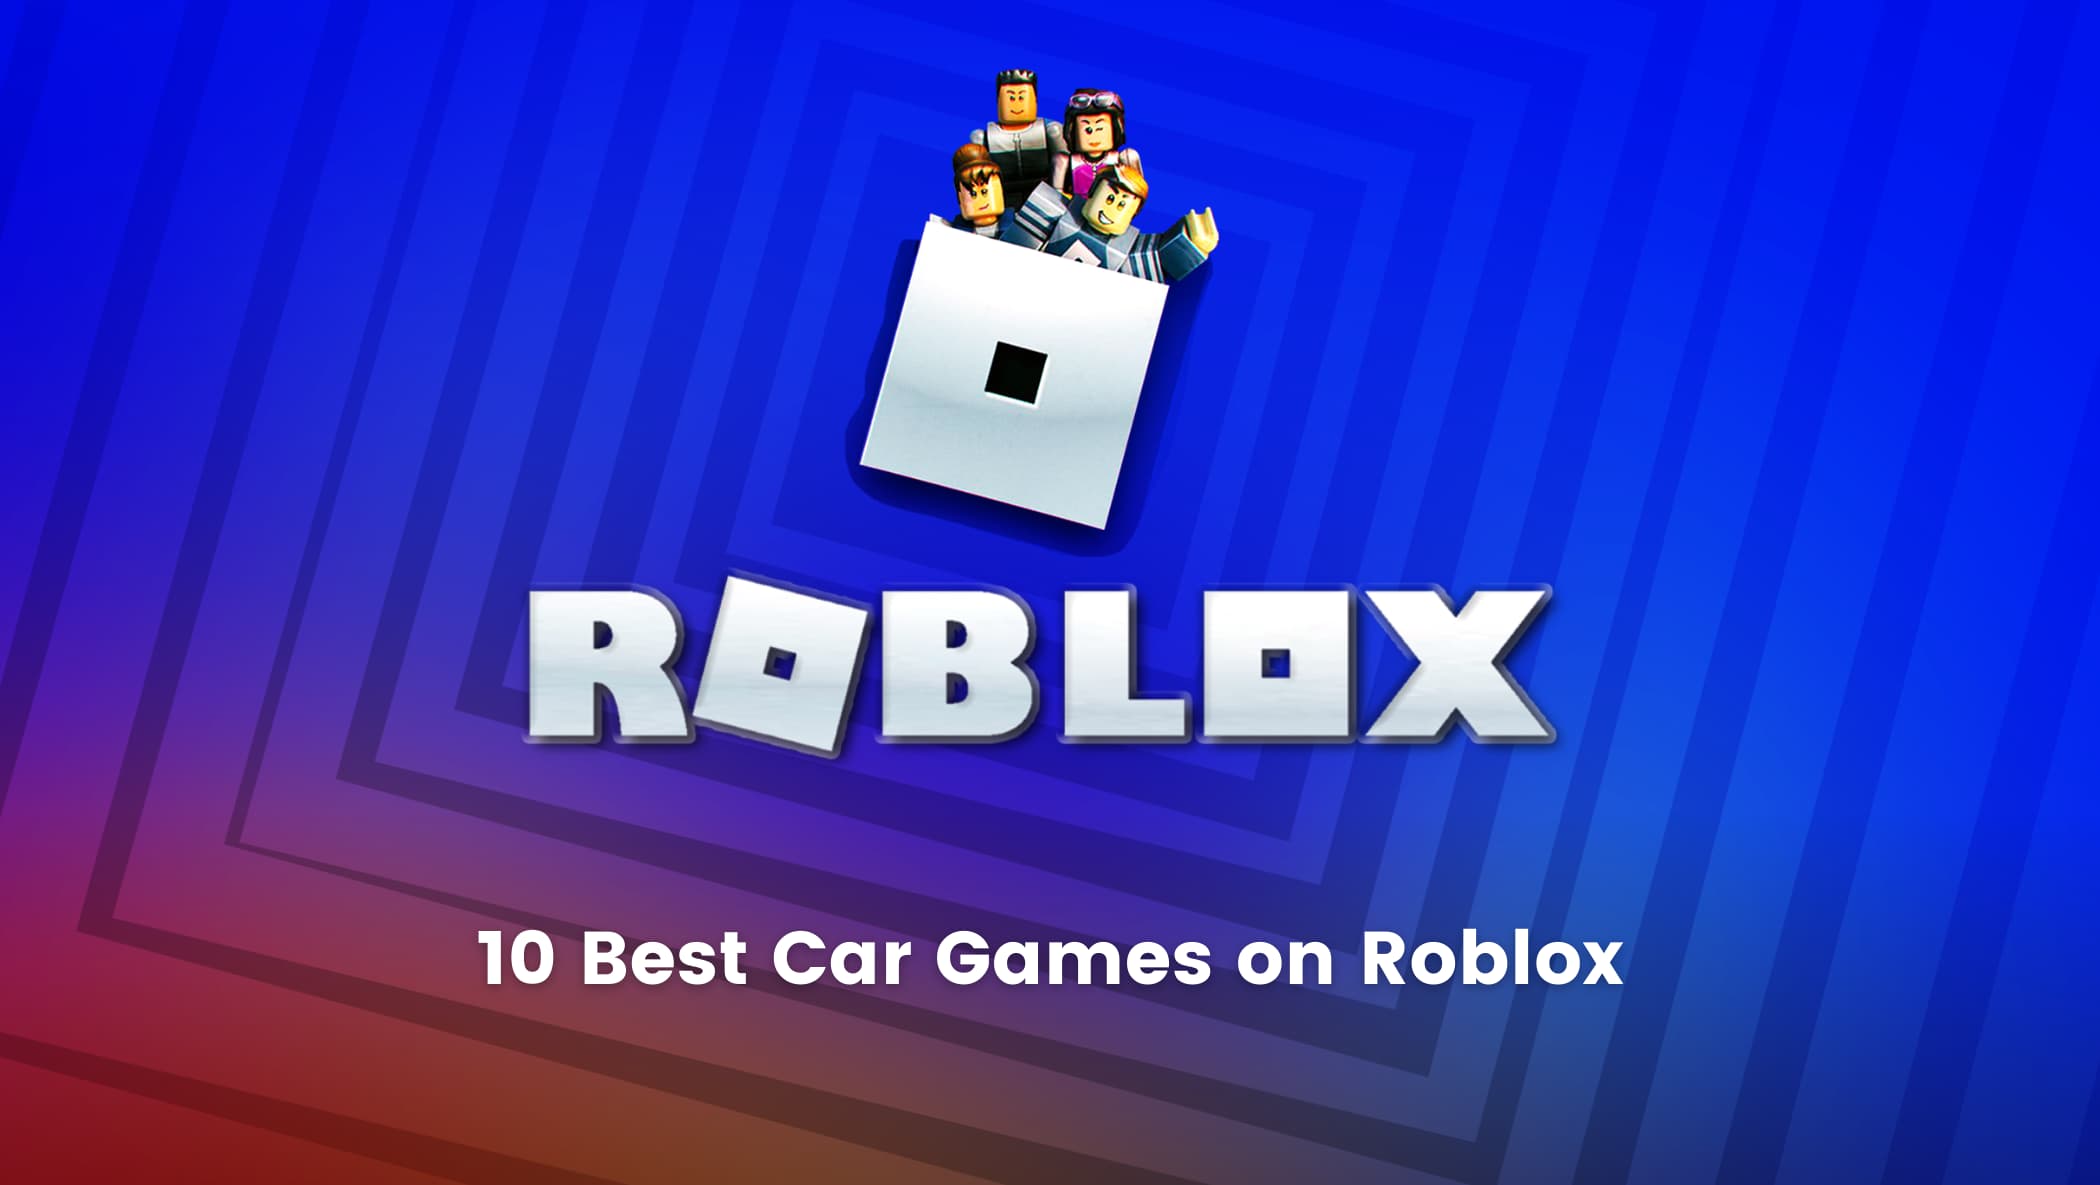 Top 5 Roblox games like Fortnite in 2022